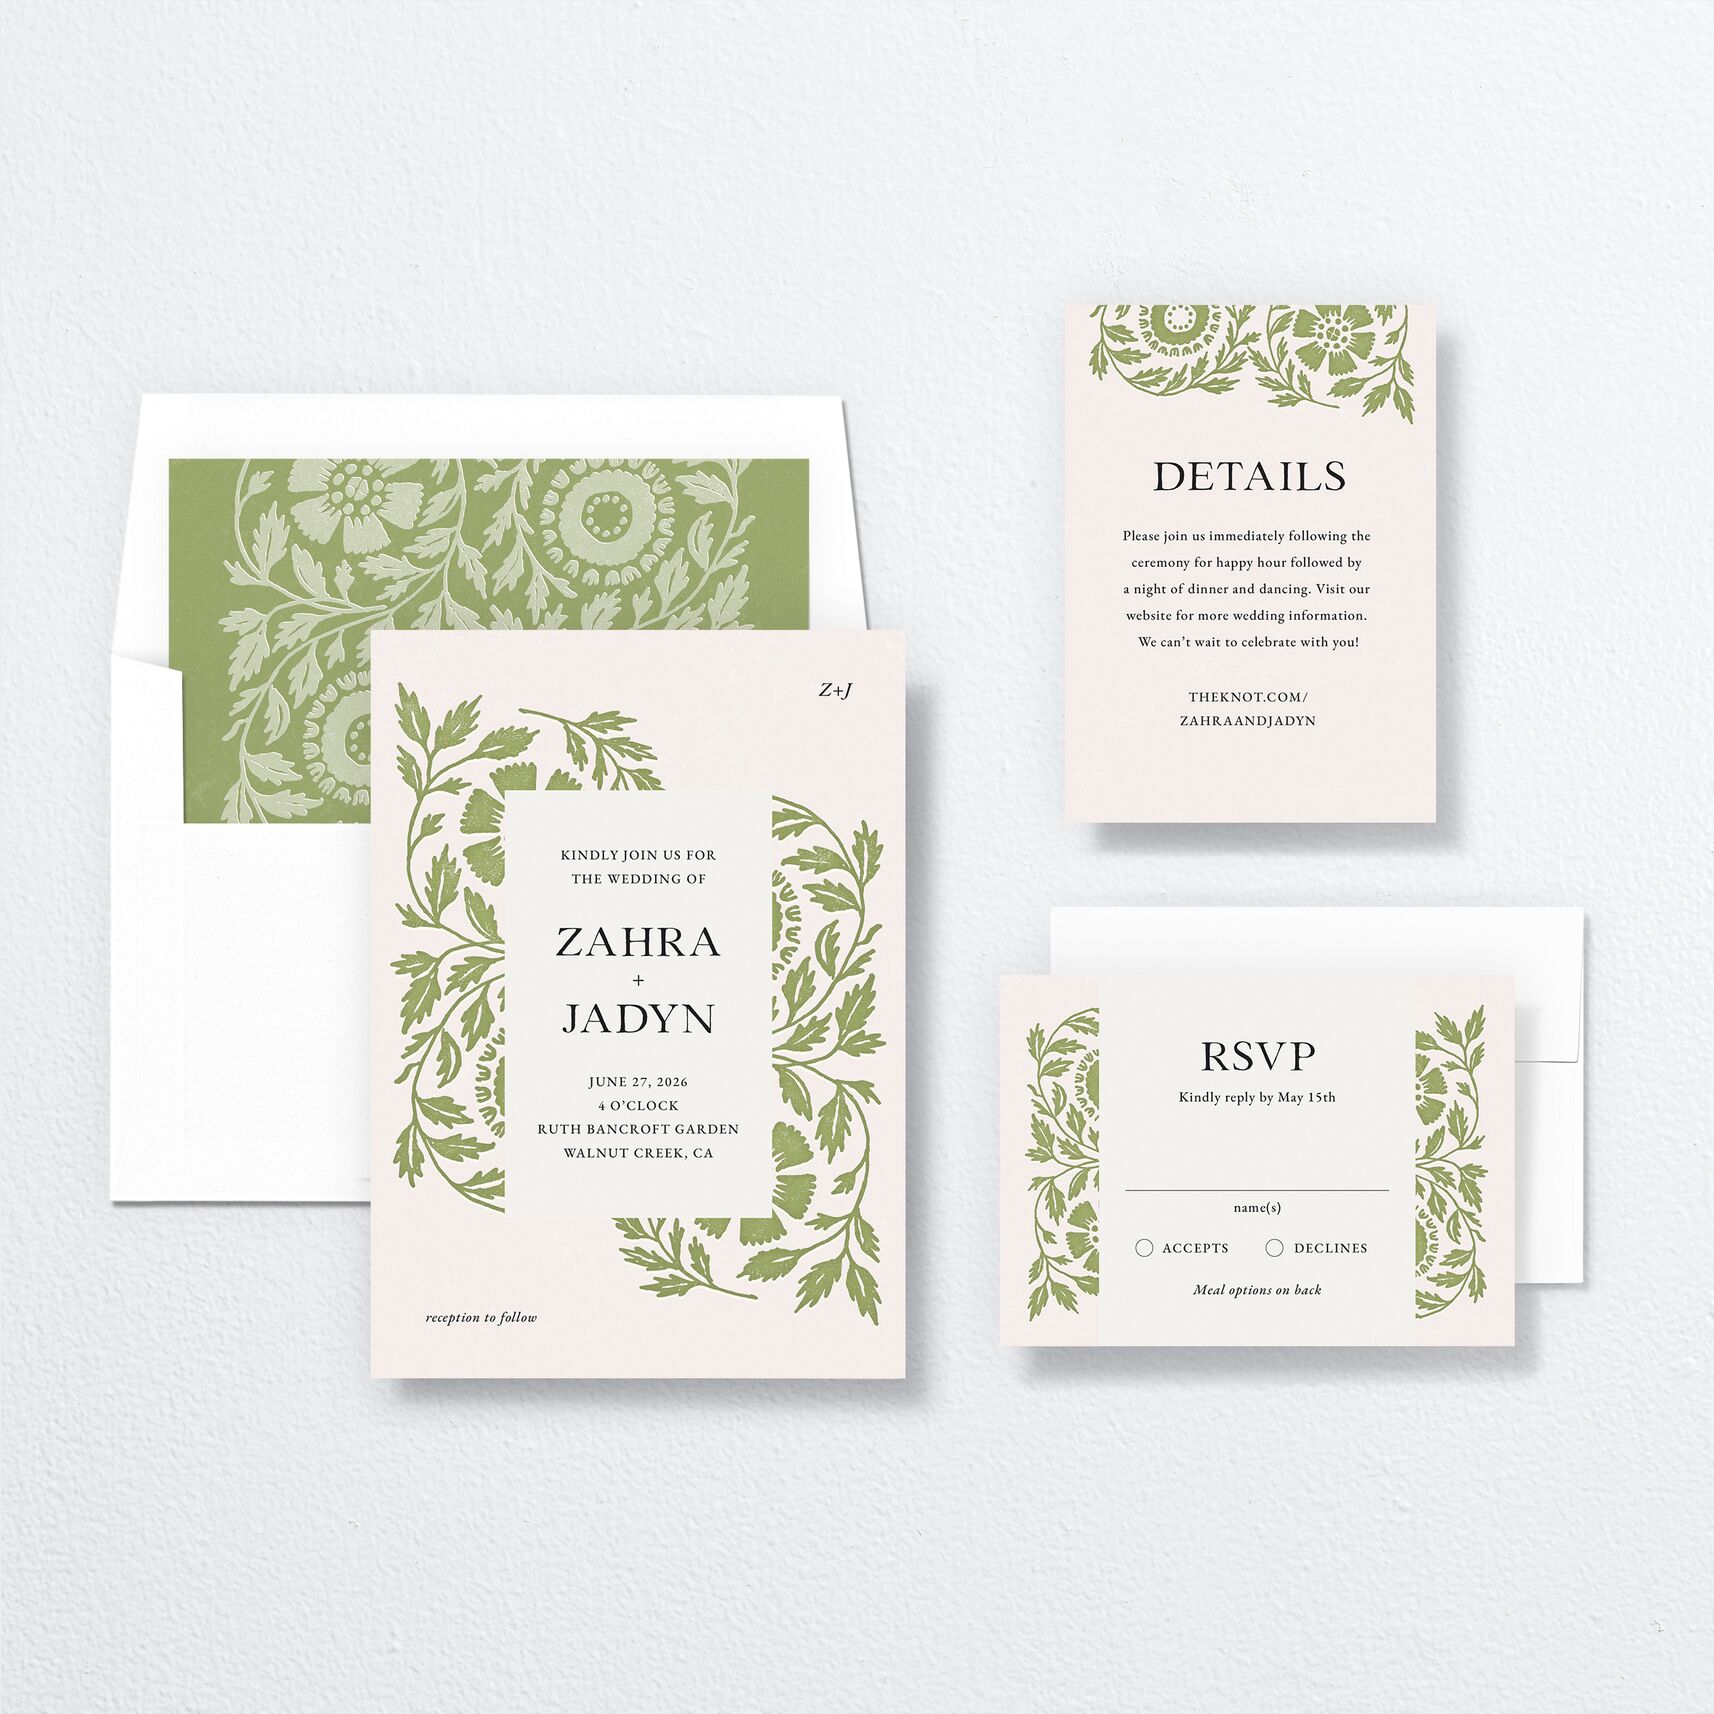 Block Print Wedding Invitations suite in green